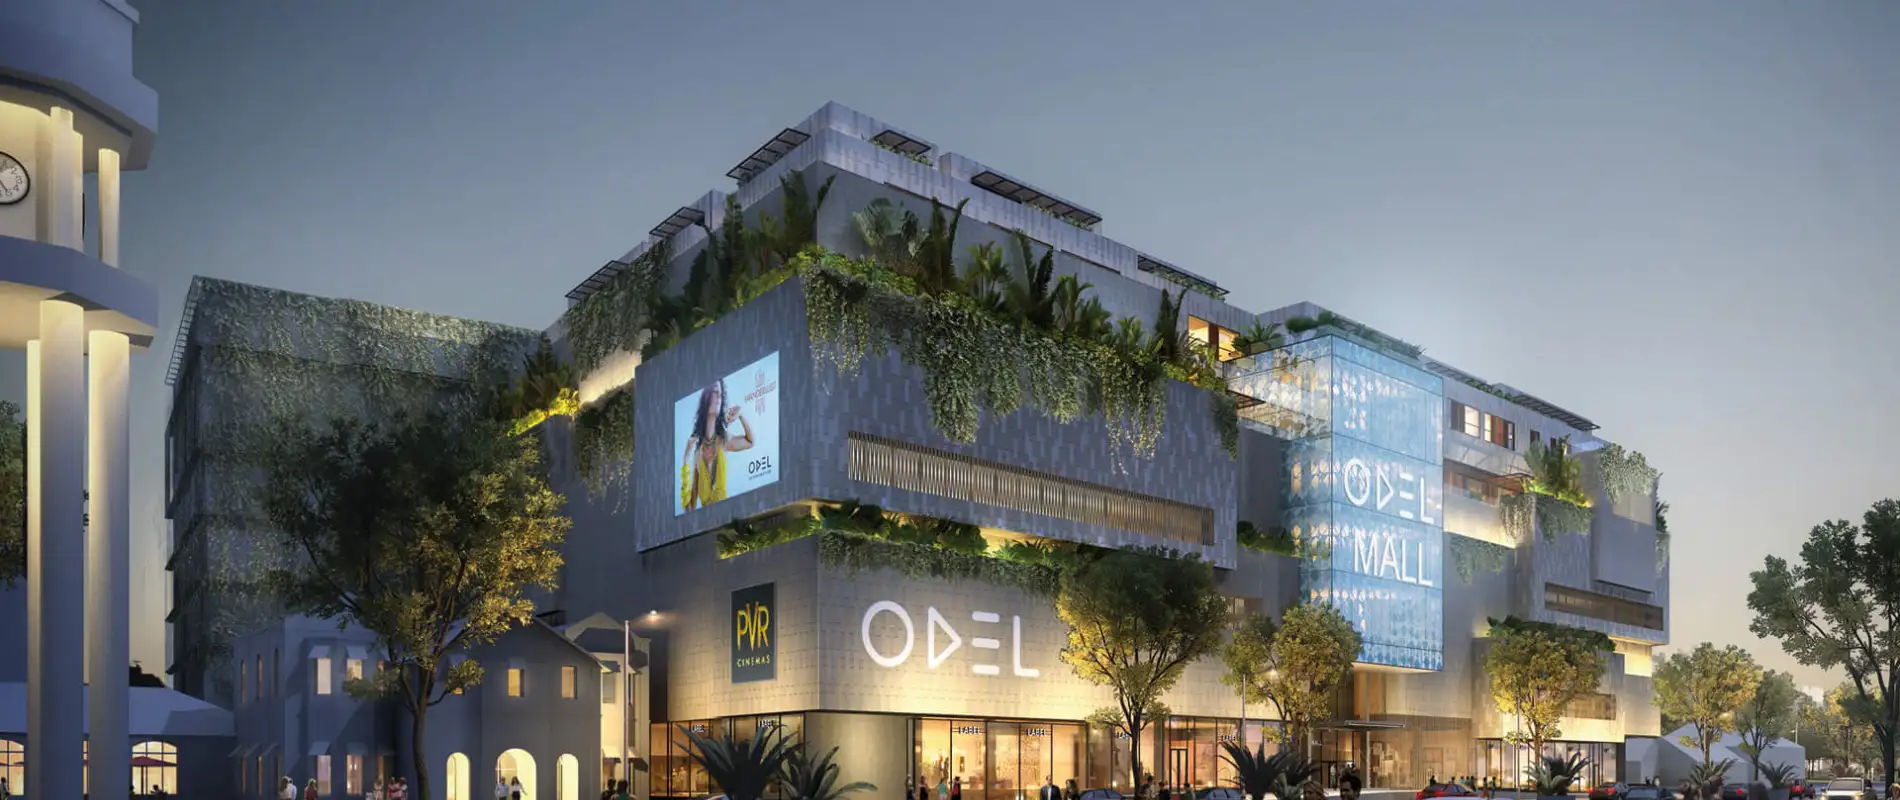 Mall - Corporate Identity - Objekt Marketing - Odel Mall Sri Lanka - rendering by night